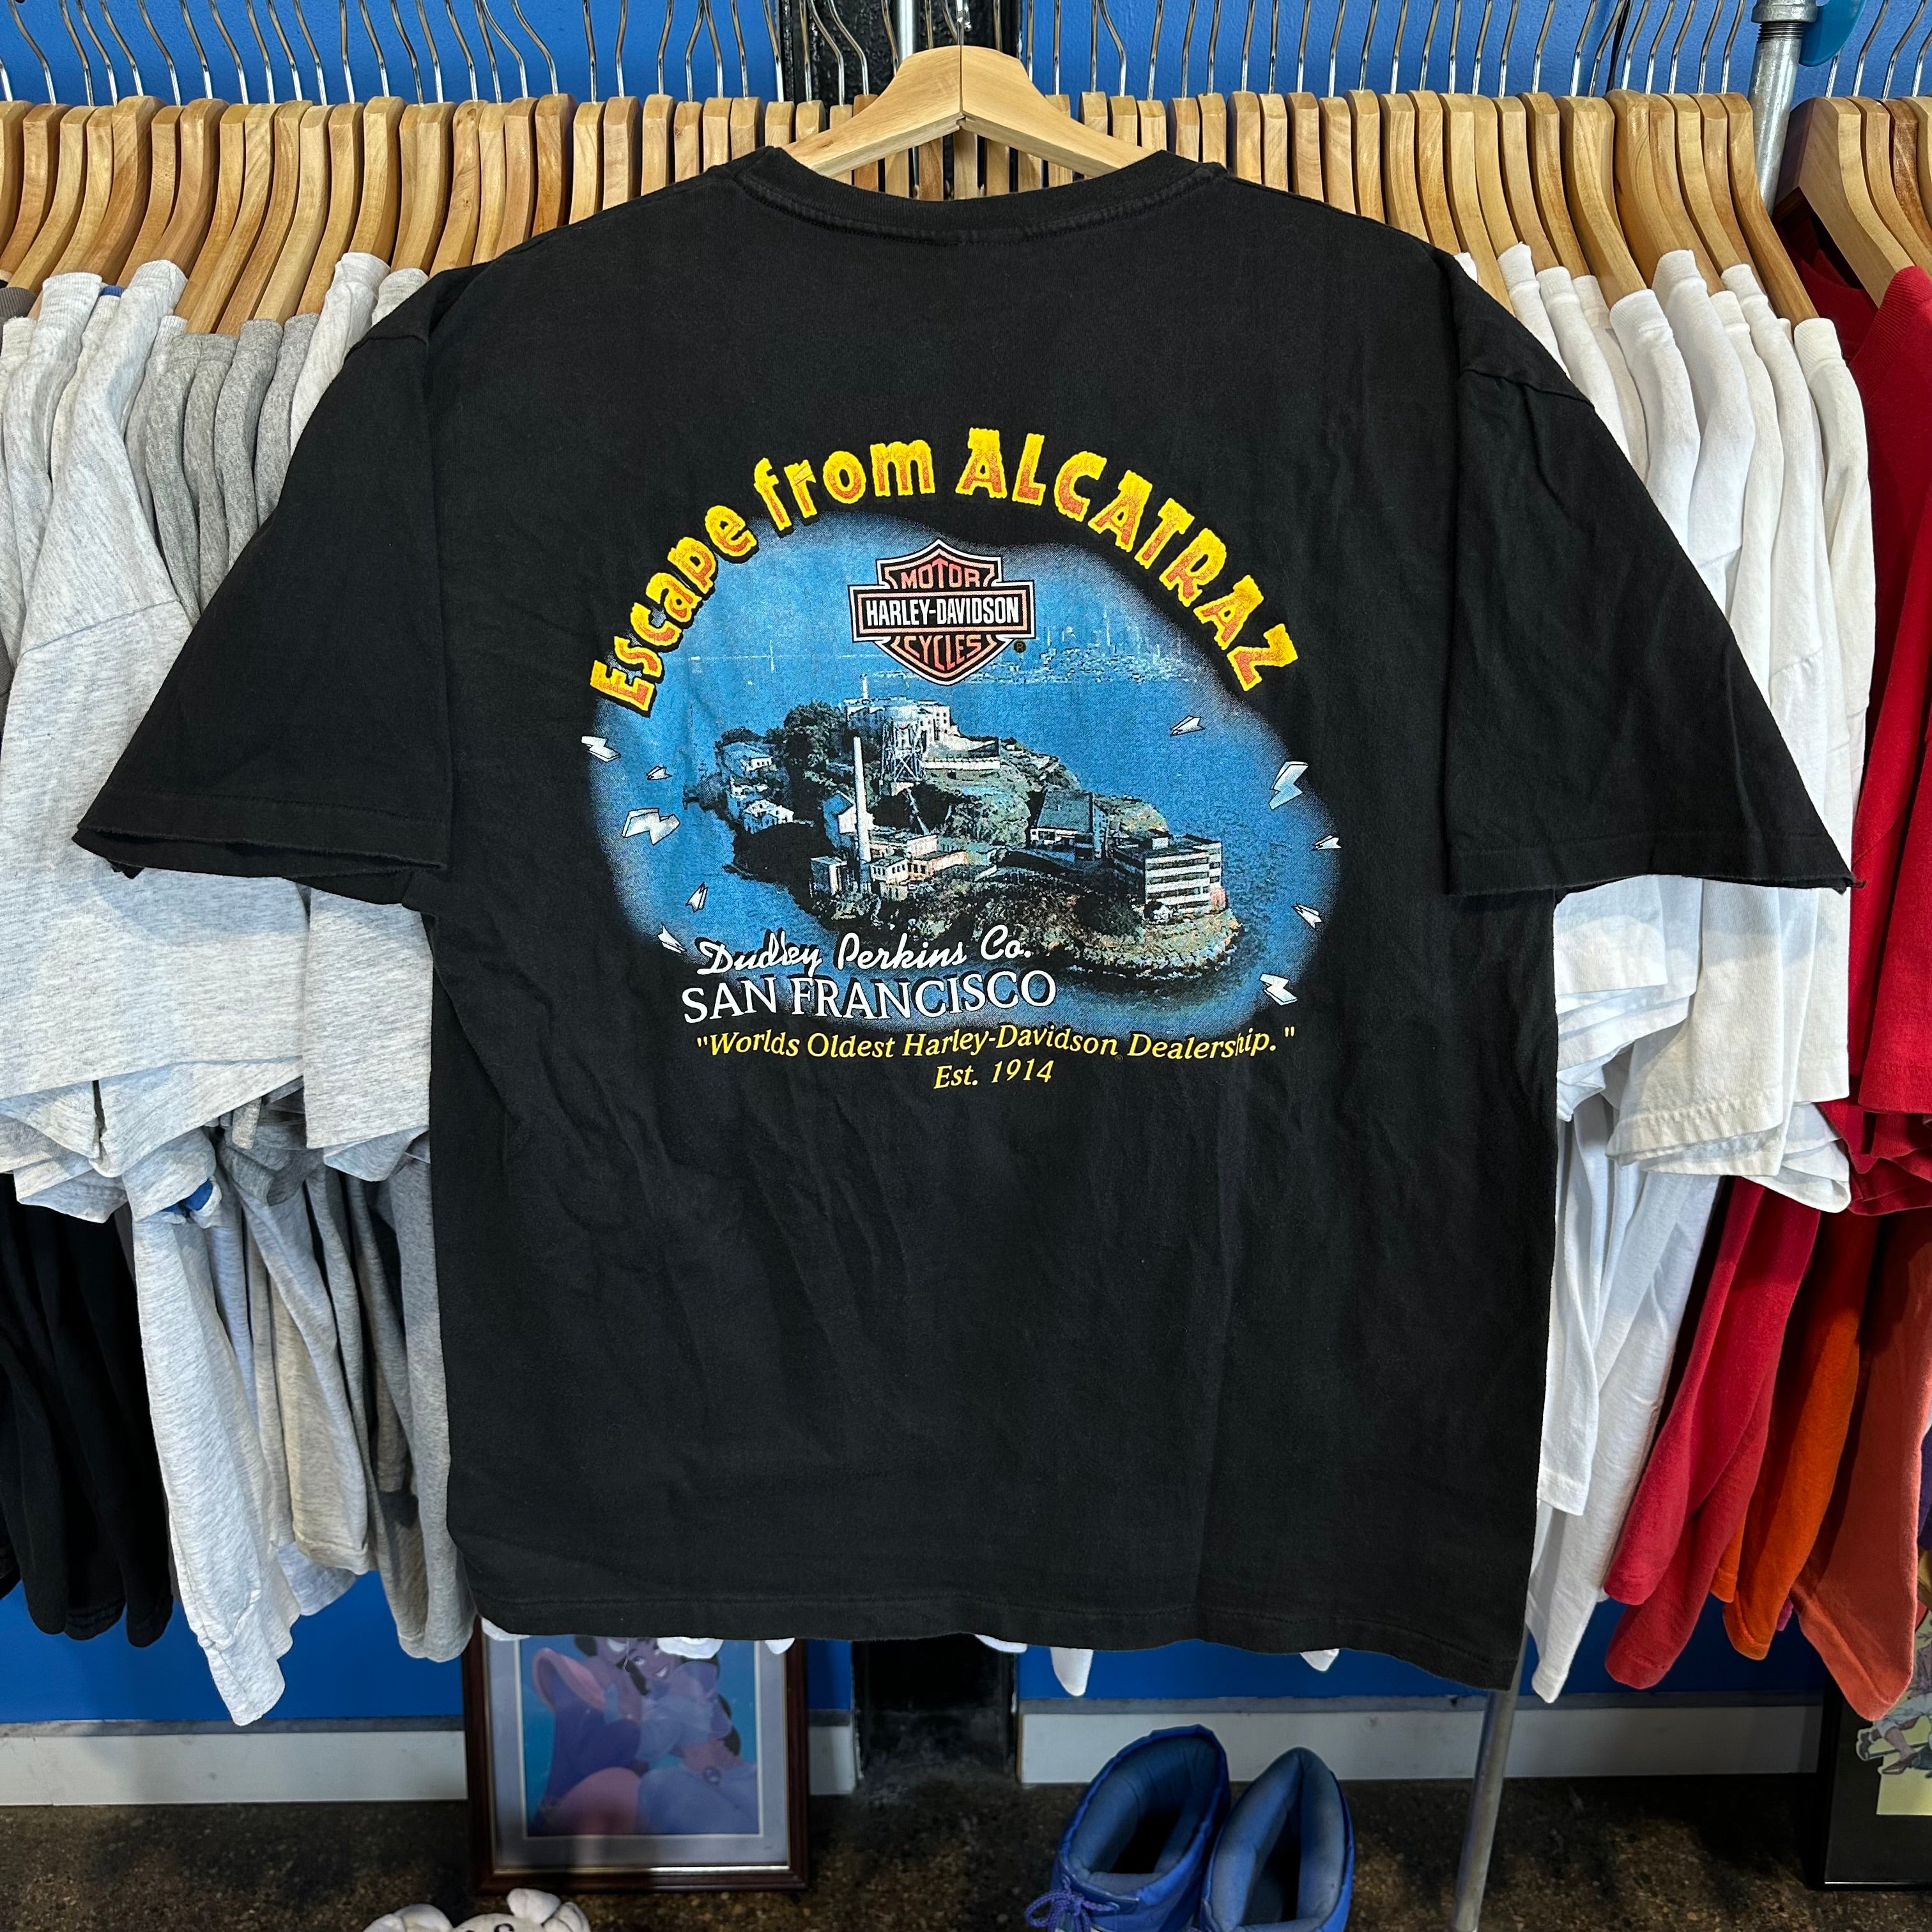 Harley Davidson The Great Escape Alcatraz, San Francisco T-shirt